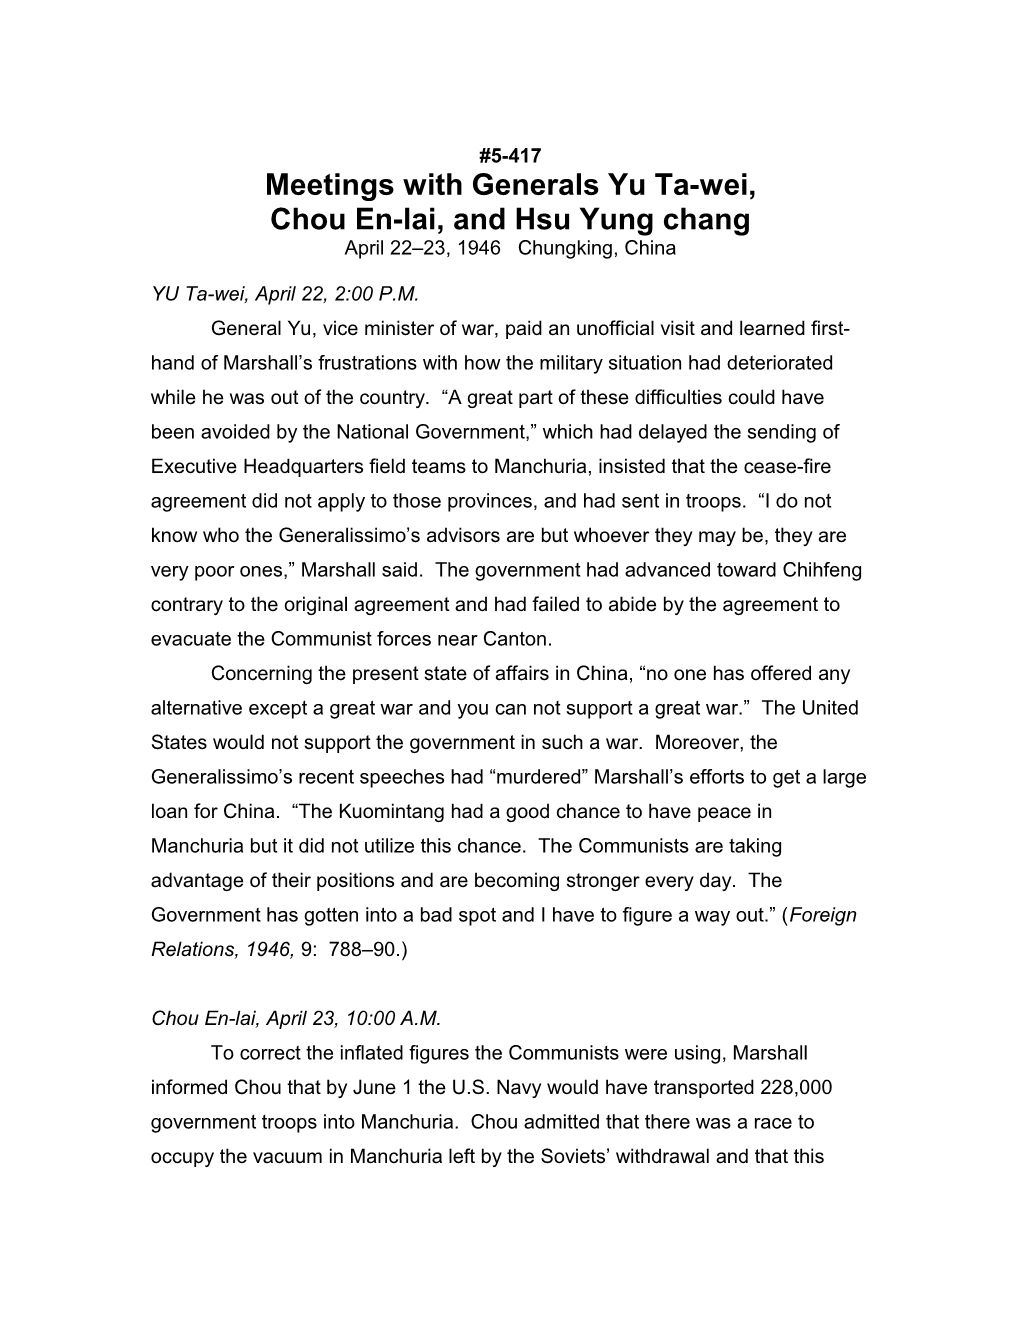 Meetings with Generals Yu Ta-Wei